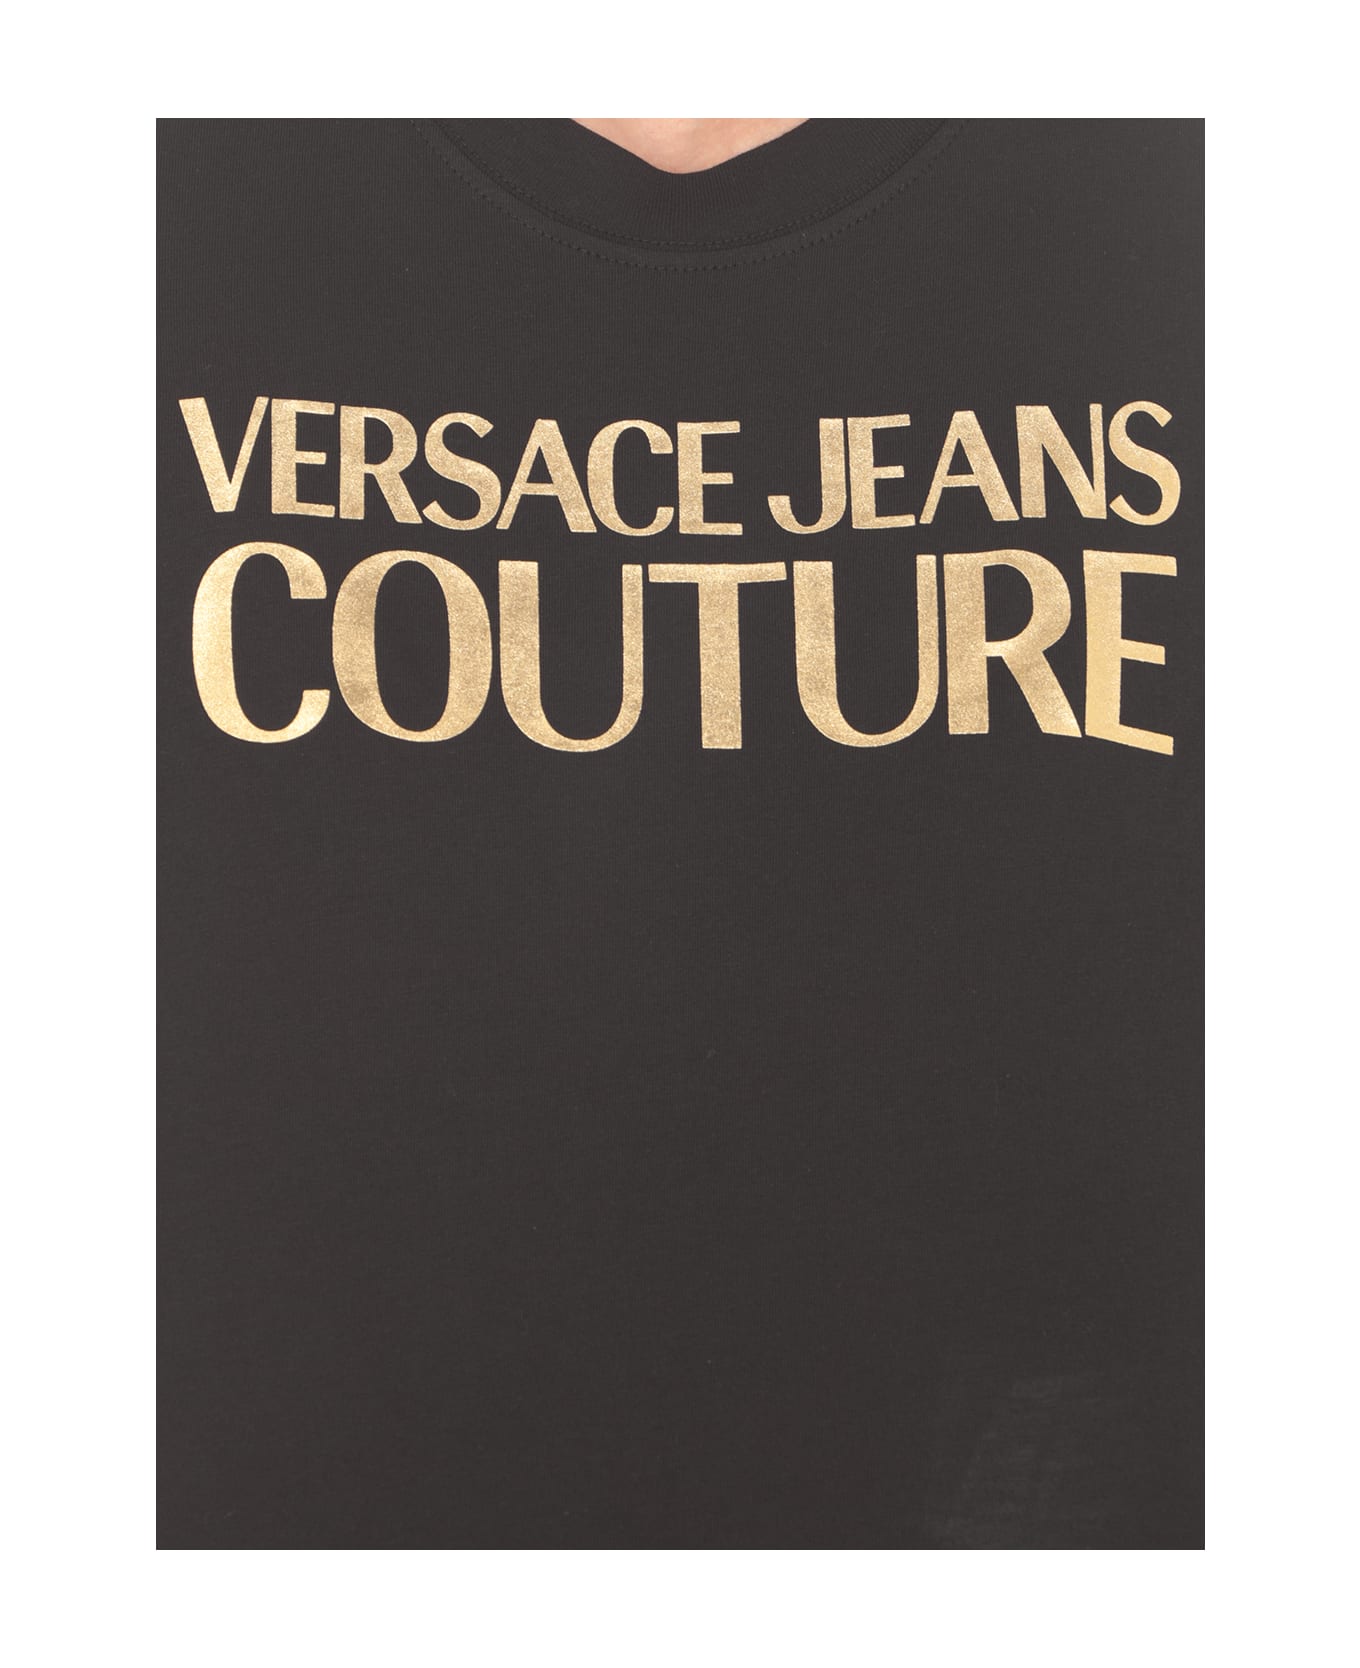 Versace Jeans Couture Logo Printed Crewneck T-shirt - Black